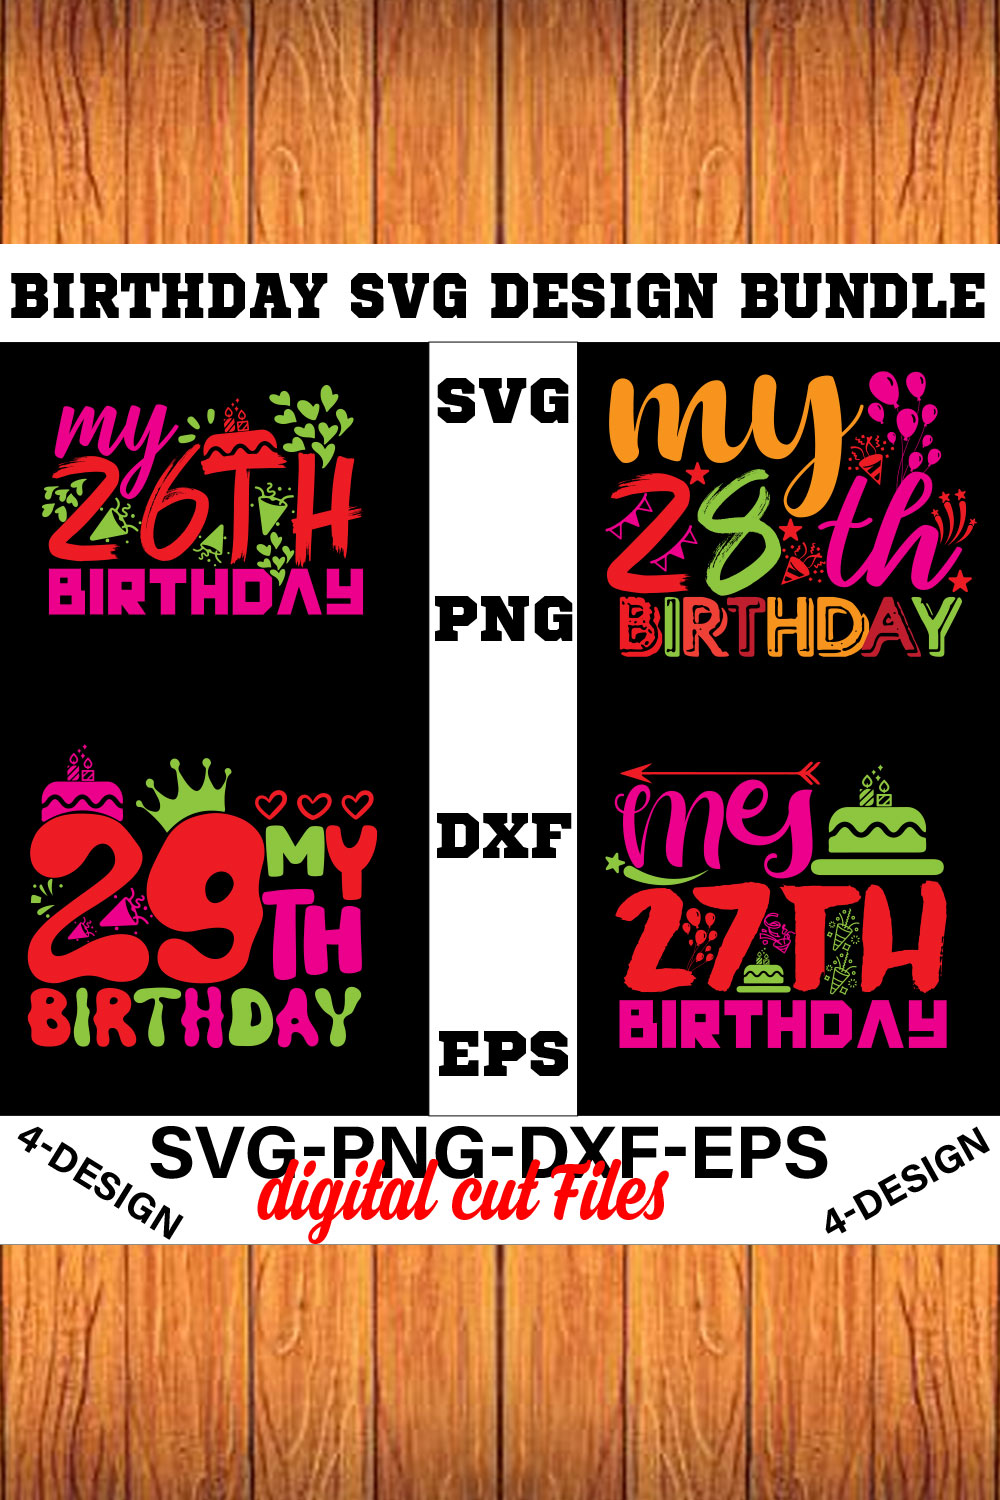 birthday svg design bundle Happy birthday svg bundle hand lettered birthday svg birthday party svg Volume-07 pinterest preview image.